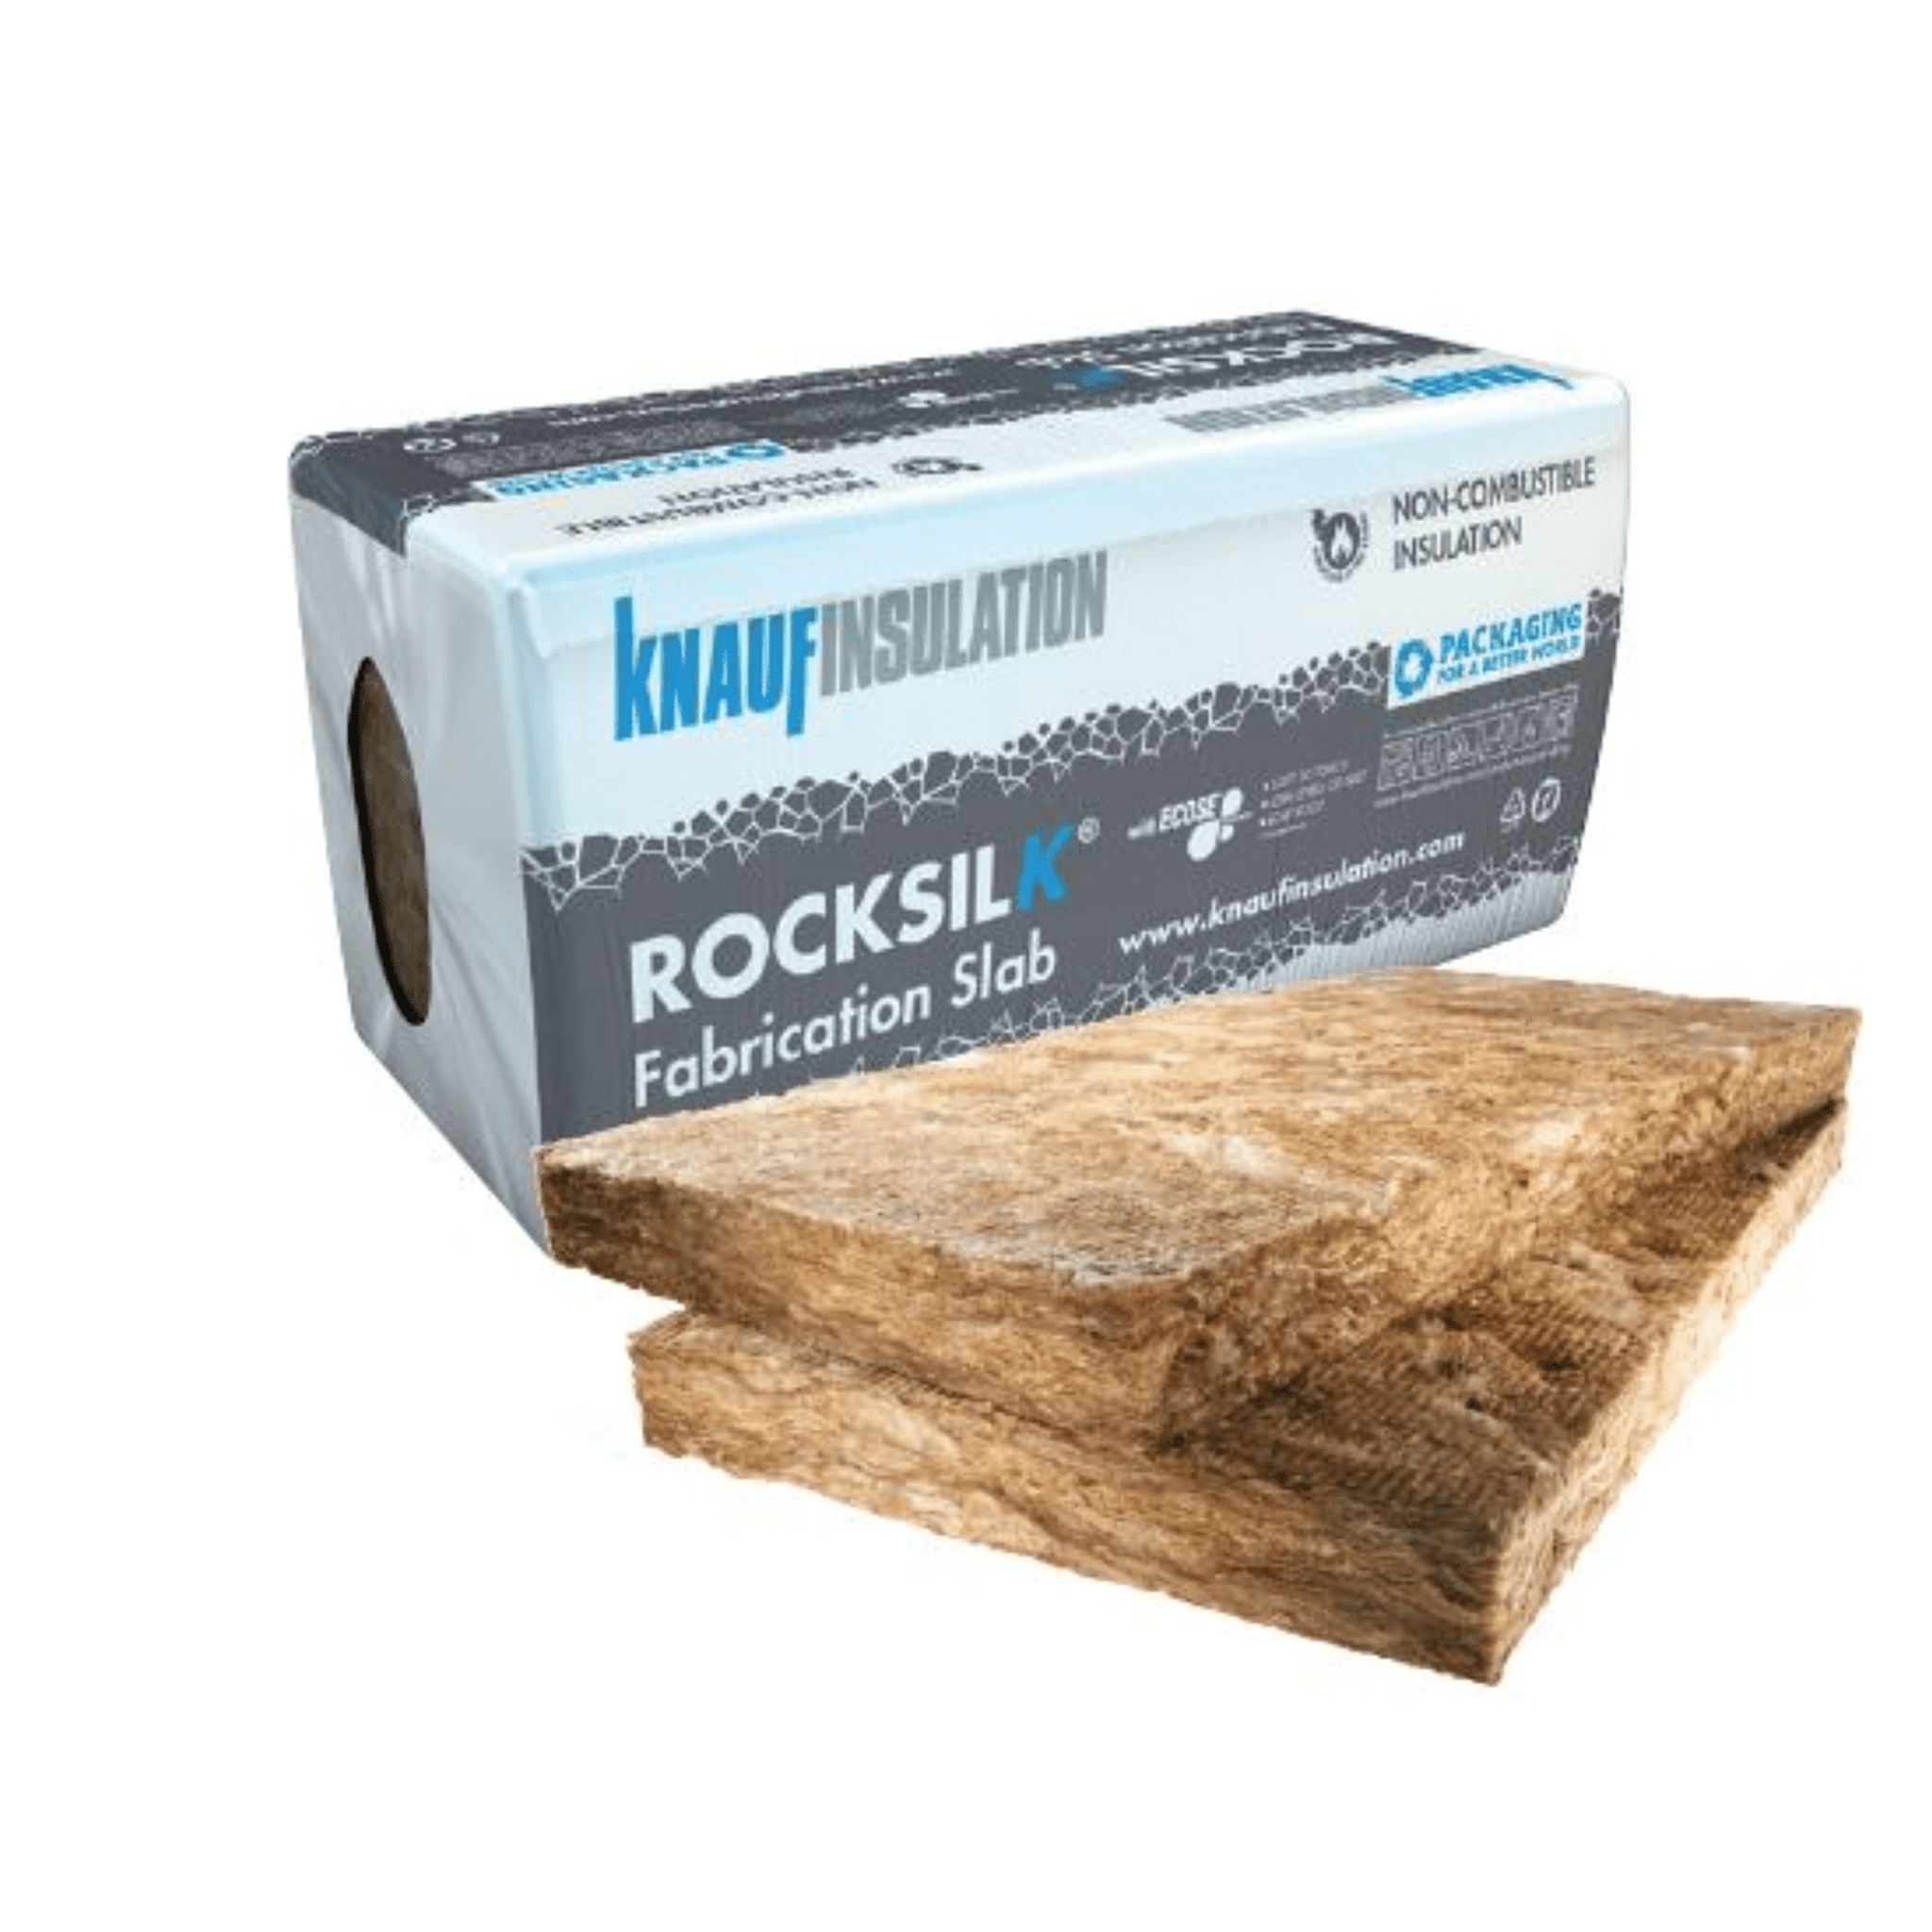 Knauf Knauf Rocksilk Fabrication Slab | 1200 x 600 x 100mm (40kg/m3) | Pallet of 12 packs IUK01814